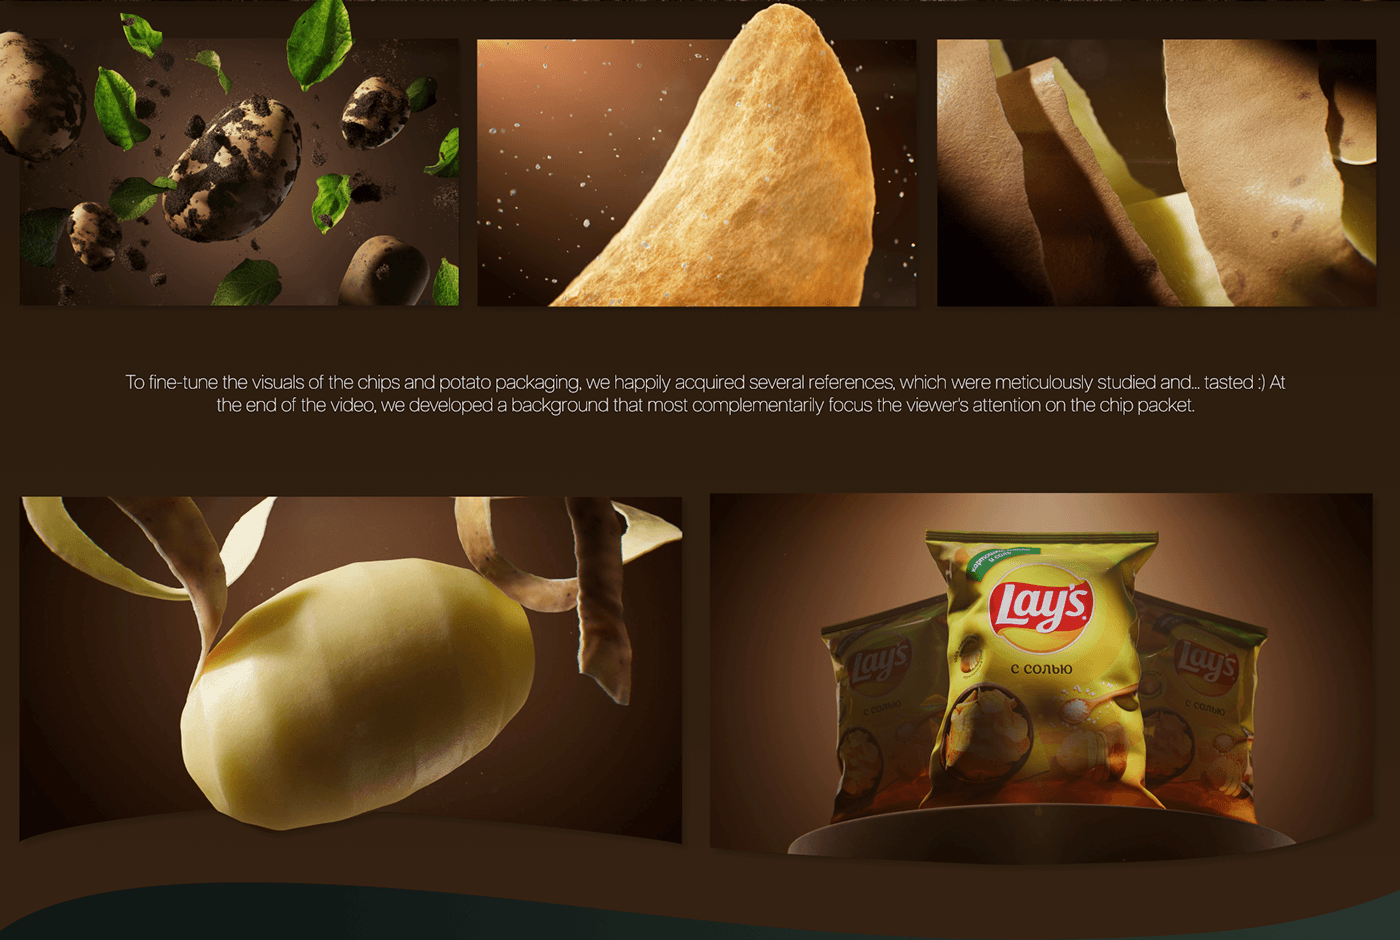 chips potato Lays Nature leaves photorealism slice green bush naked eye